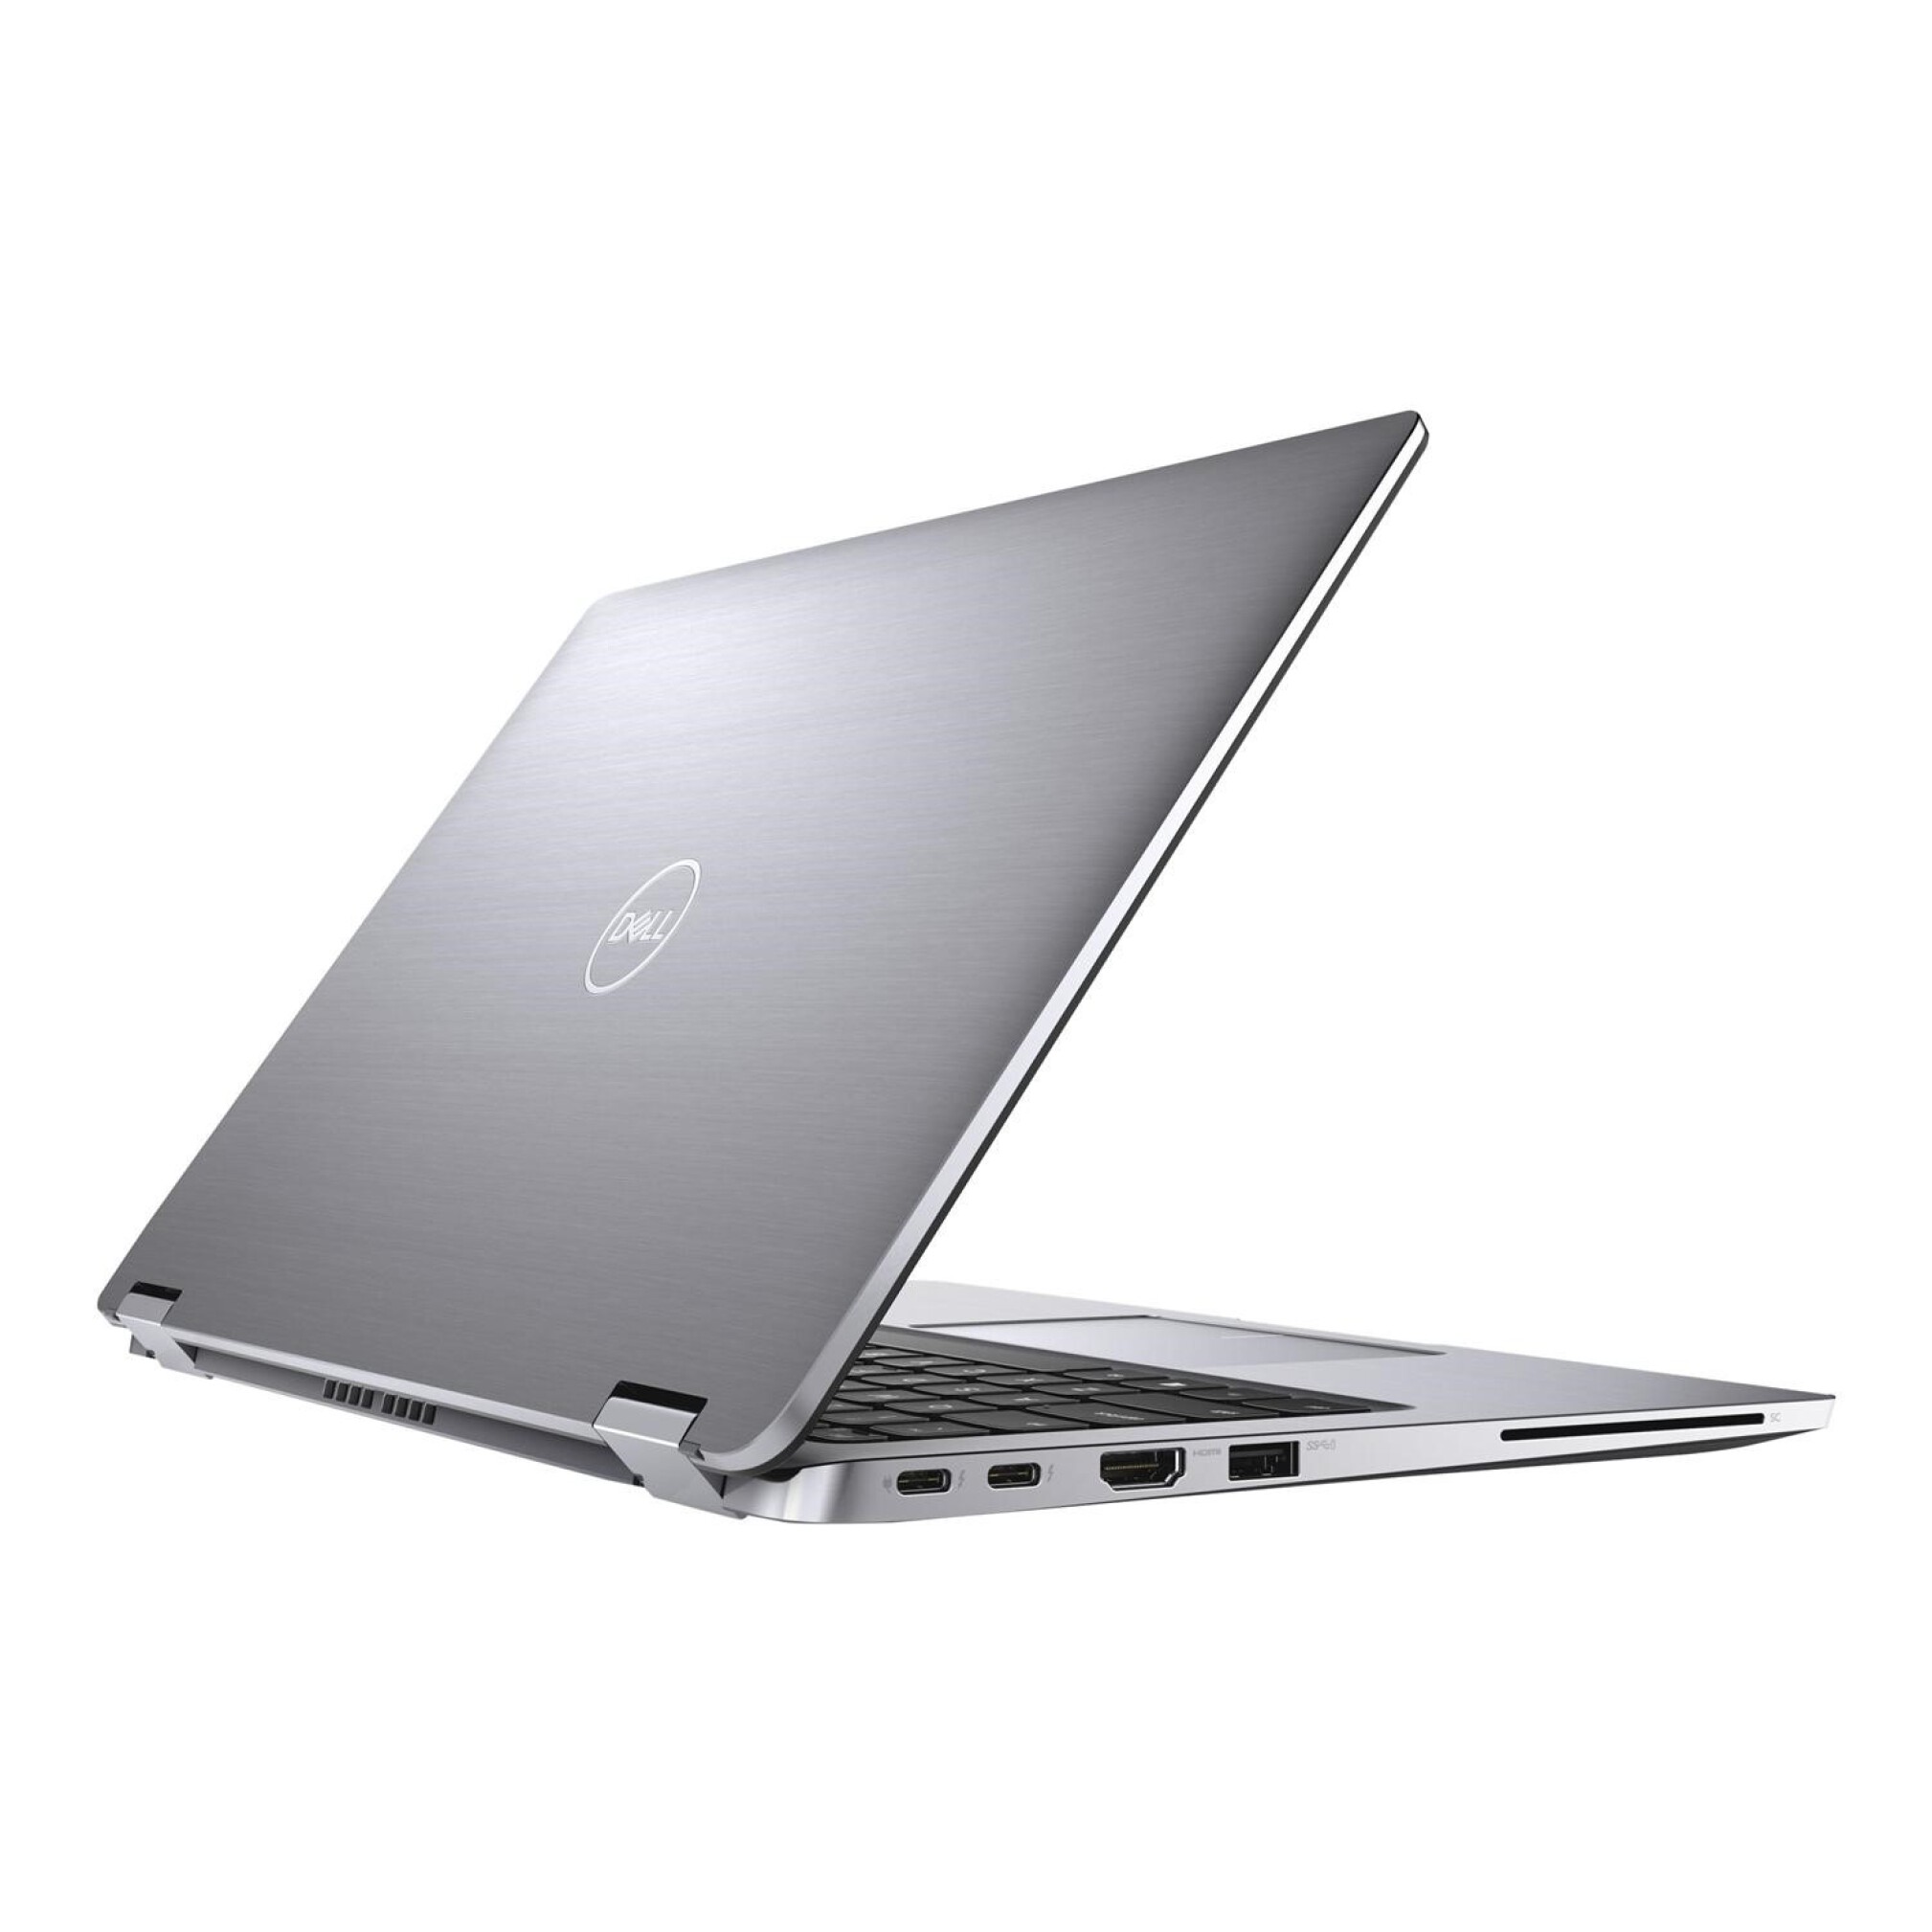  لپ تاپ 360 درجه لمسی نسل هشتم مدل Dell latitude 7400 | لاکچری لپتاپ 